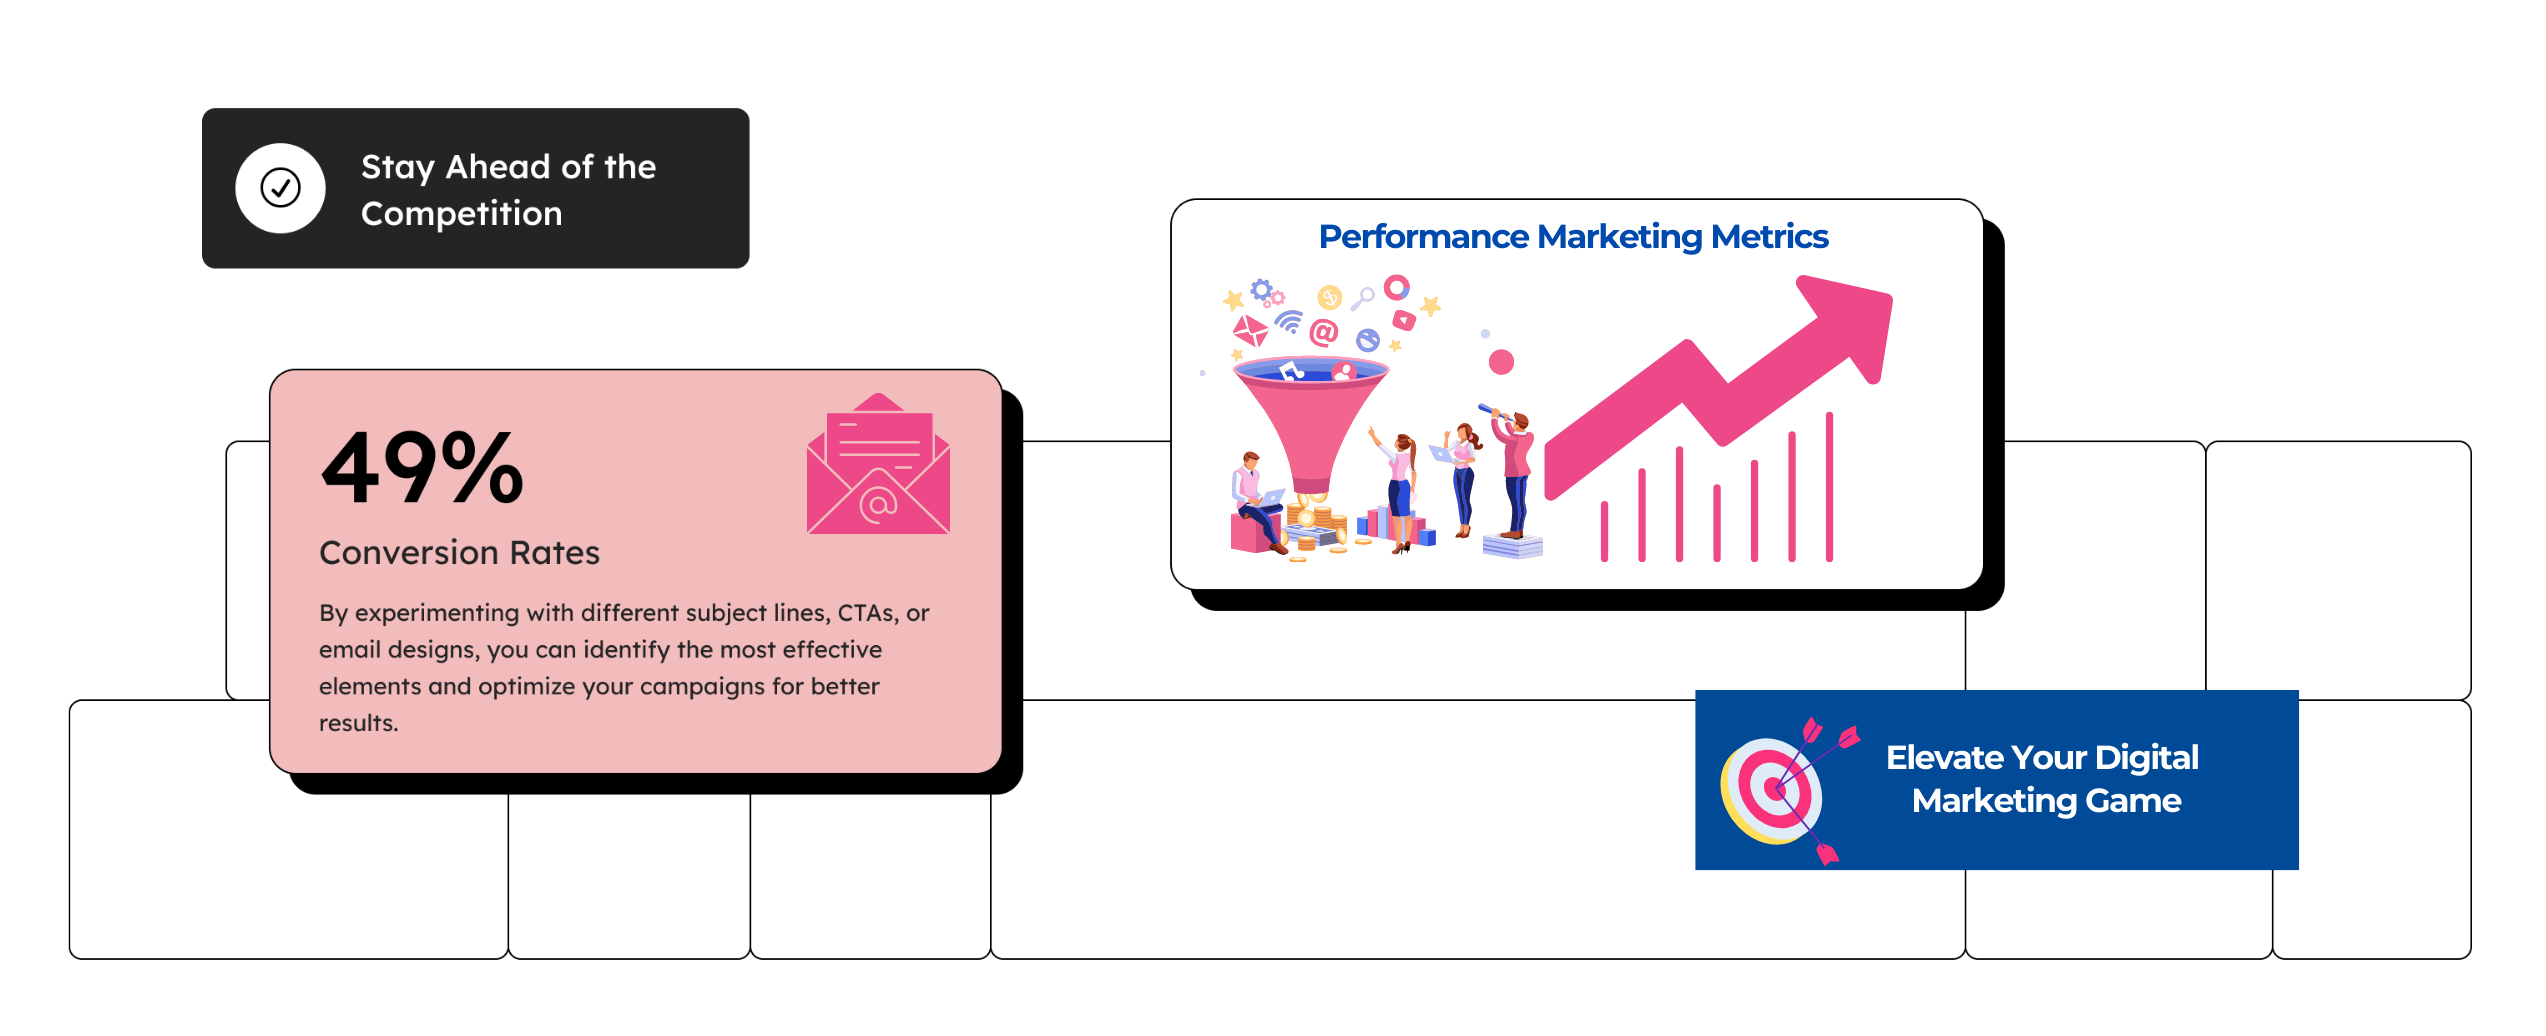 Performance Marketing 2